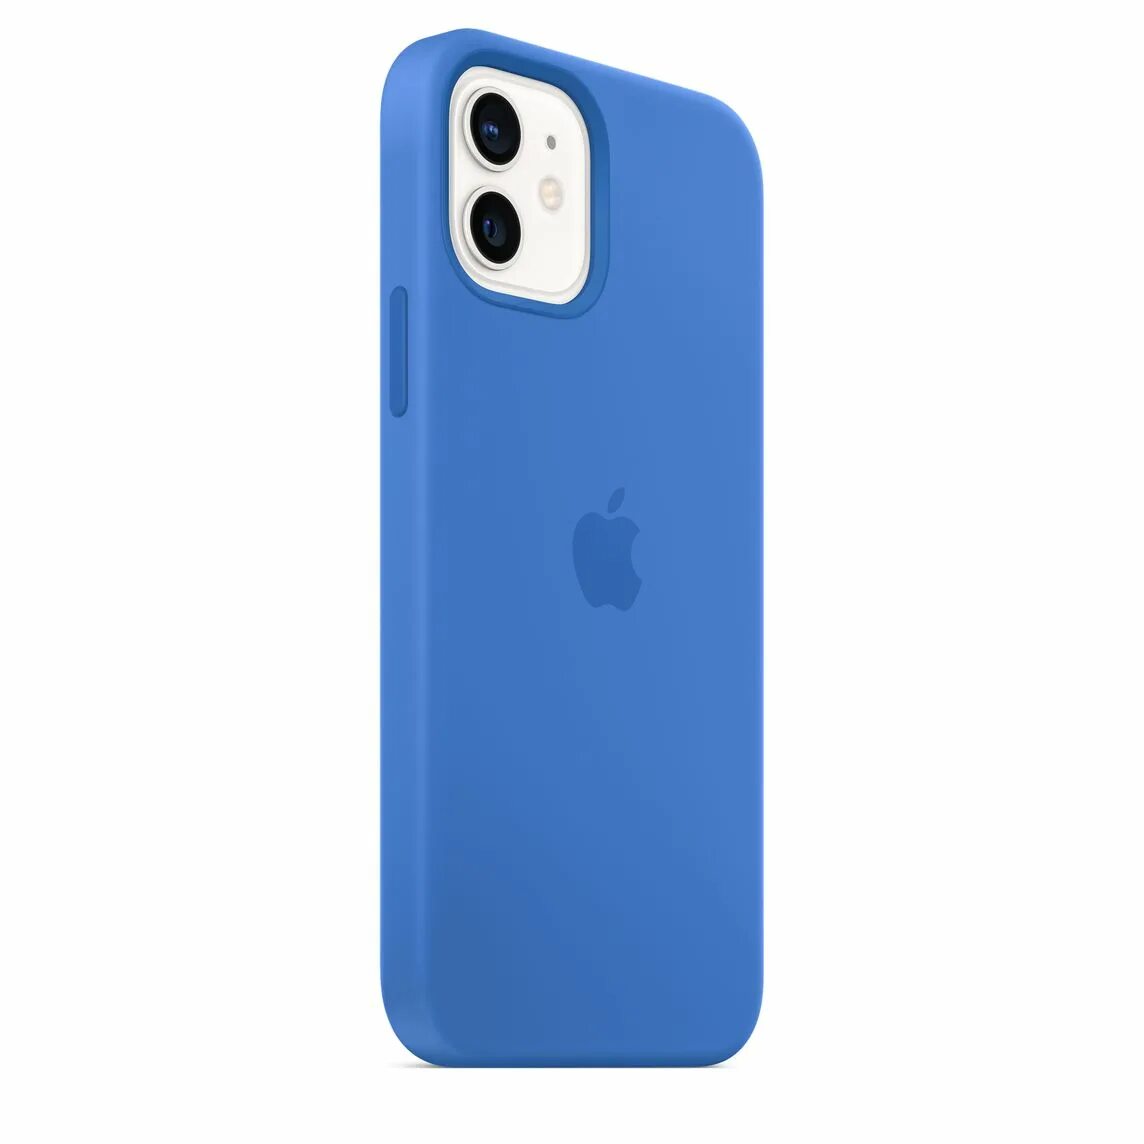 Чехол apple 12 mini. Silicon Case iphone 12 Pro Max. Iphone 12 12 Pro Silicone Case with MAGSAFE - Capri Blue. Силиконовый чехол iphone 12 Mini Capri Blue. Синий iphone 12 в чехле MAGSAFE.